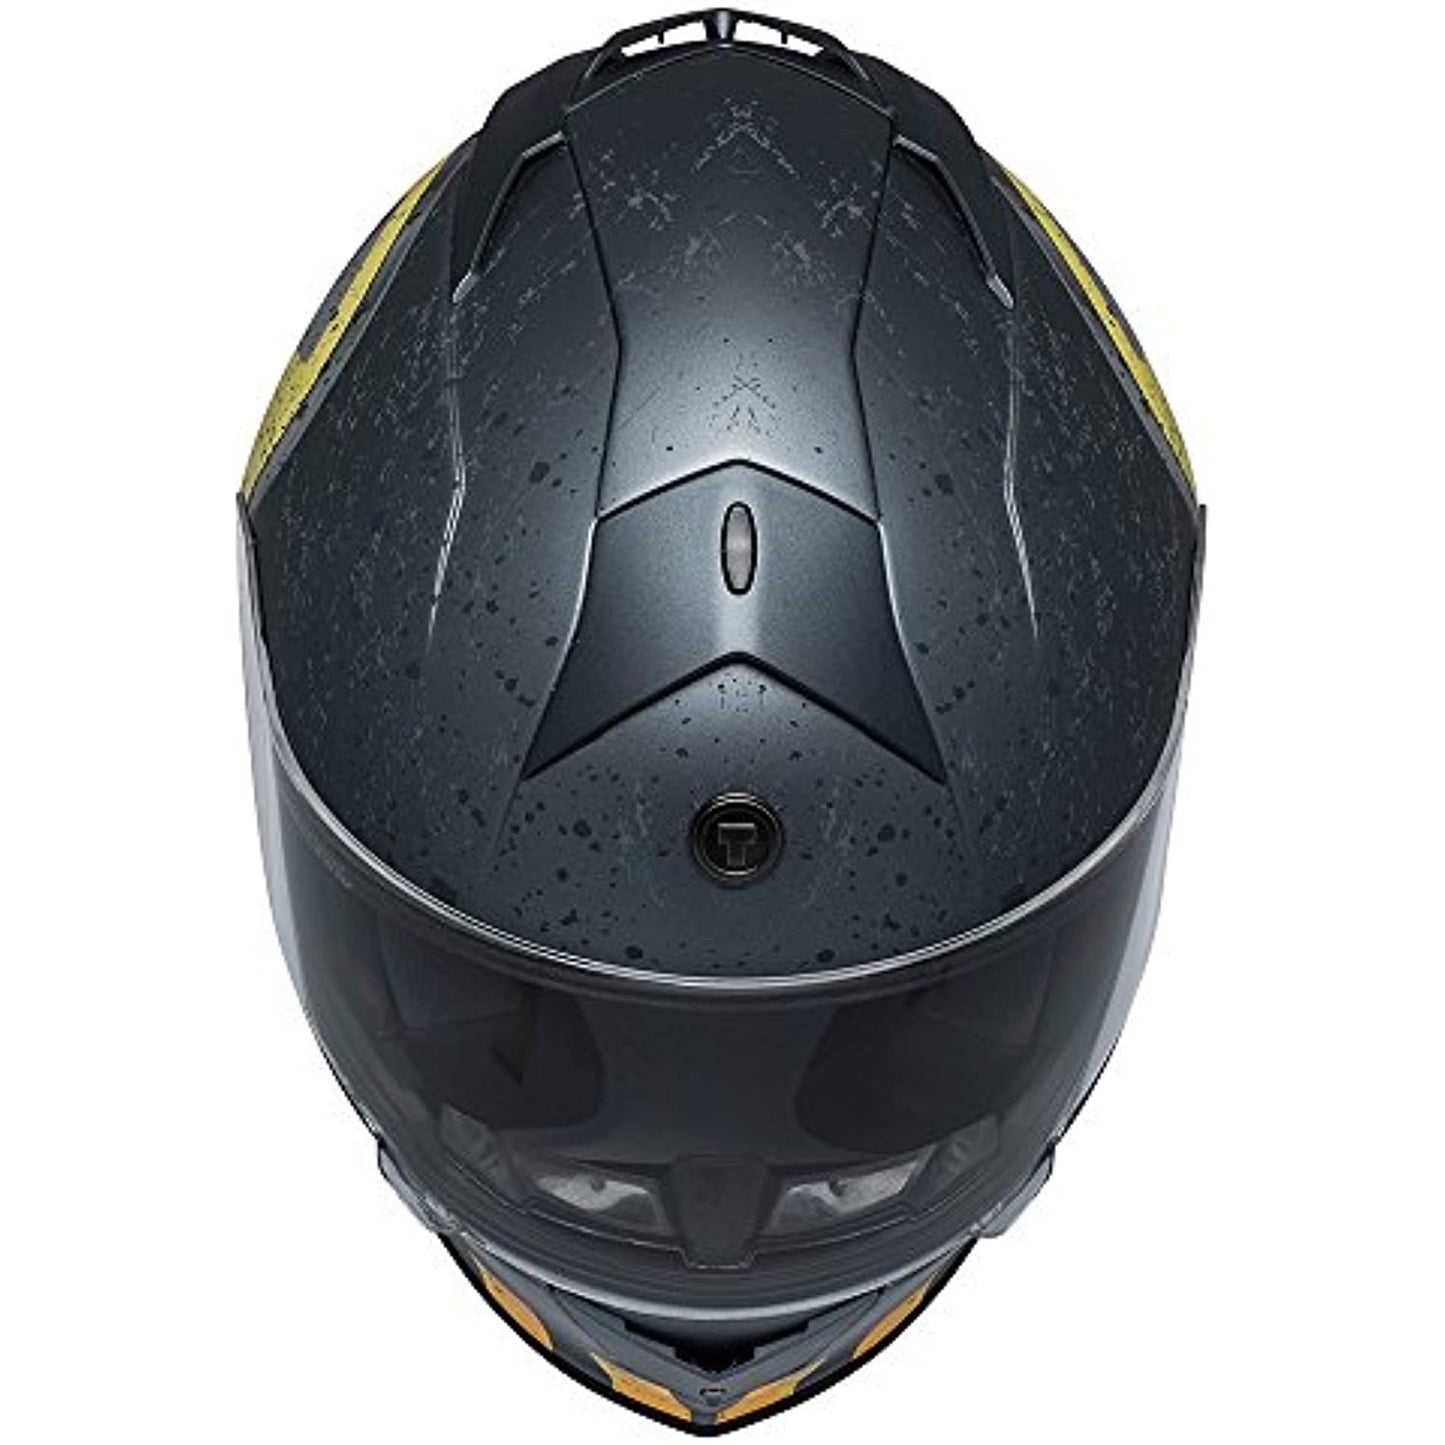 TORC Men's Full Face Helmet (Flat Grey Nuke, Small)